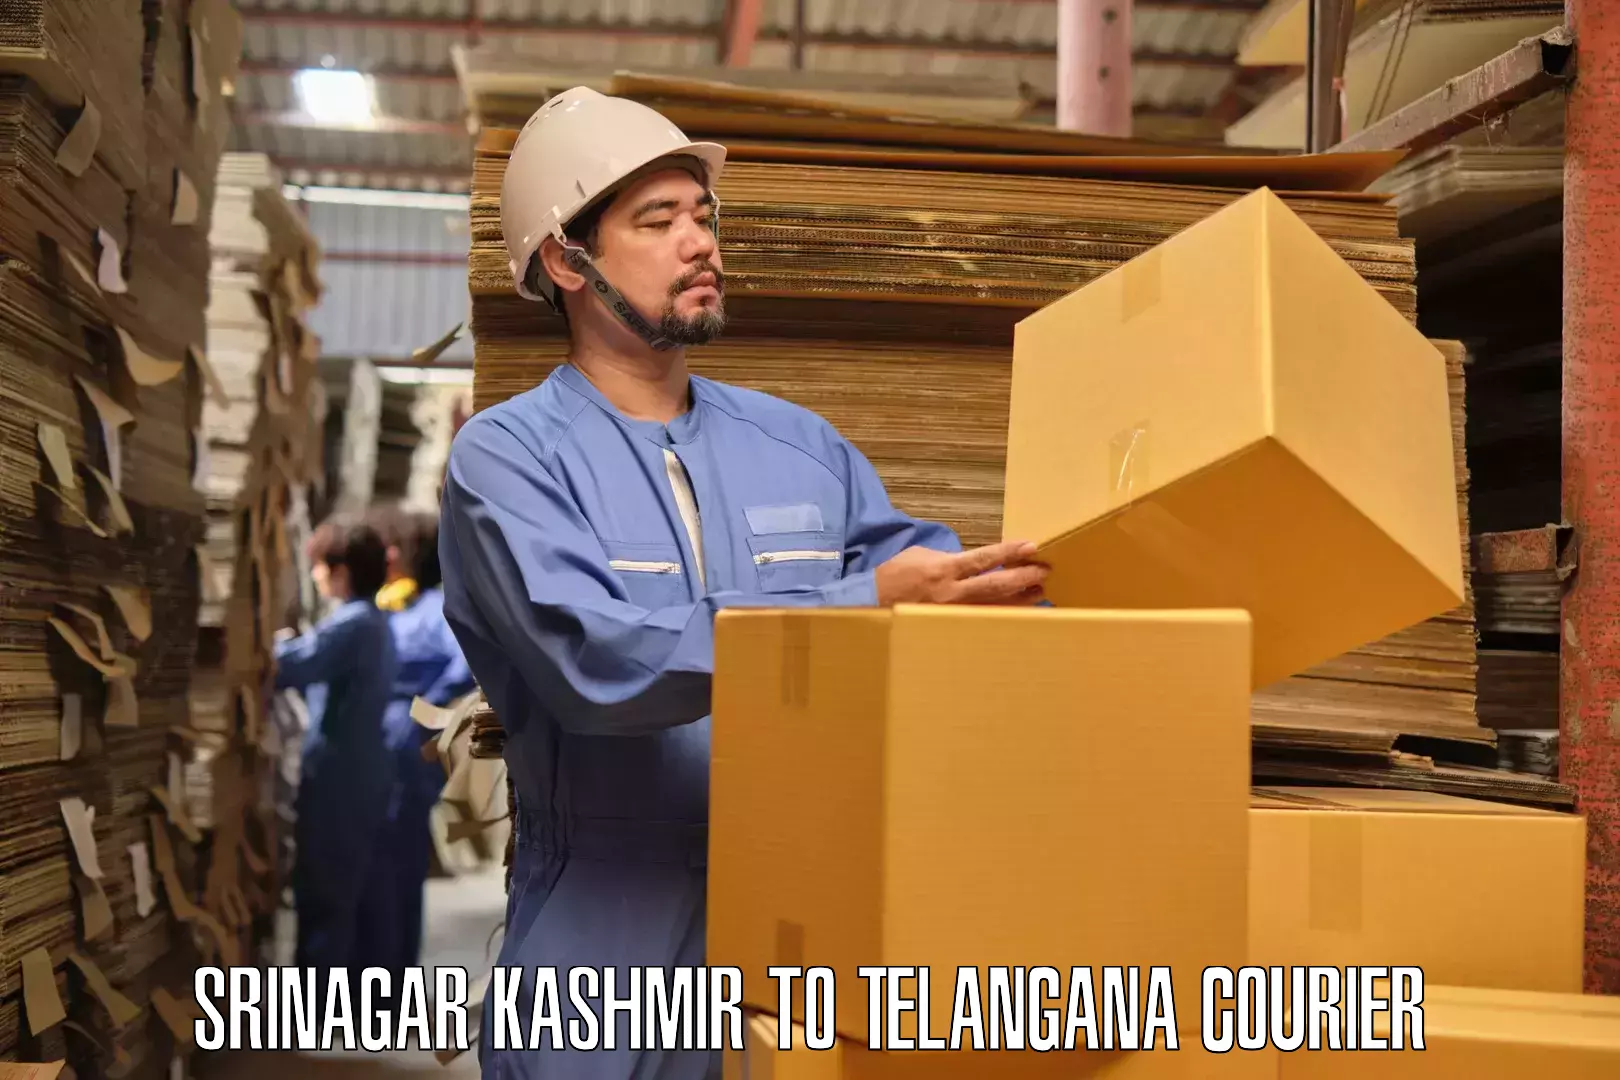 Efficient moving company Srinagar Kashmir to Danthalapally